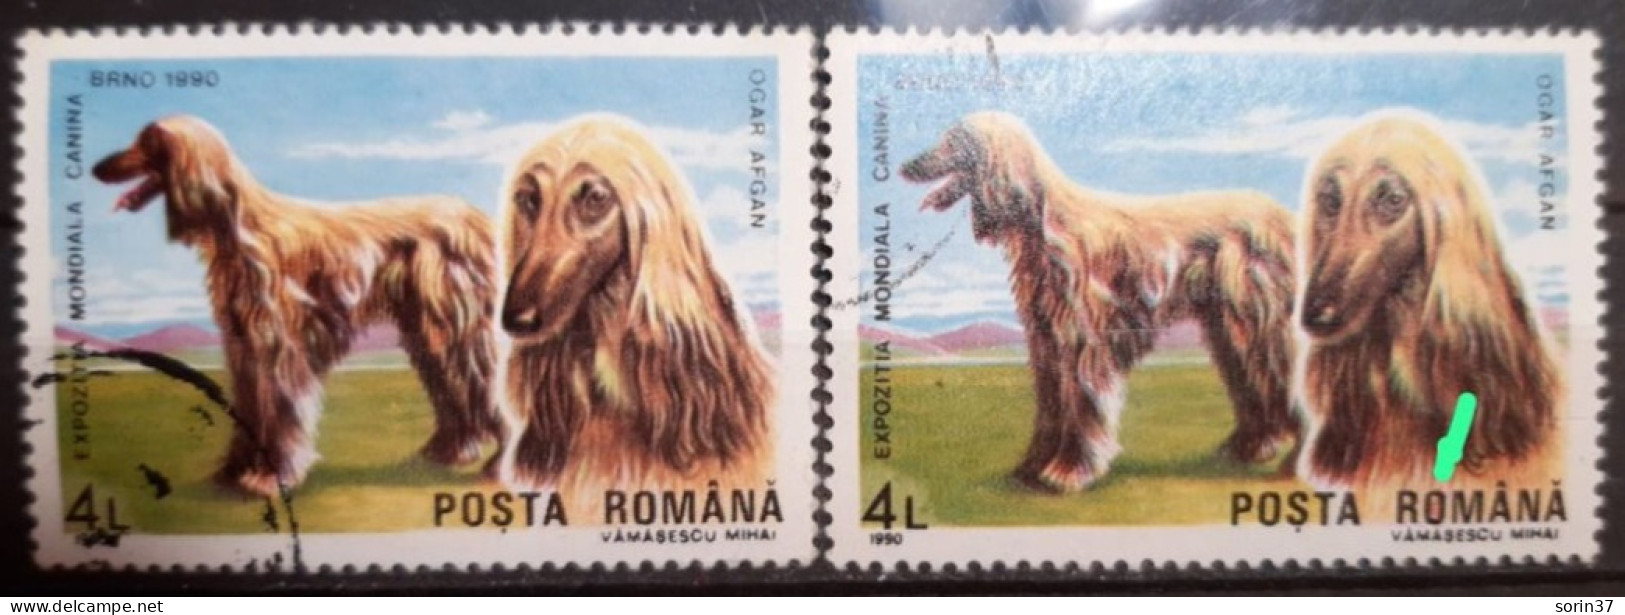 RUMANIA / ROMANIA / Error Año 1990 Yvert Nr. 3875 Usado O De Romania, Rojo Por Dentro - Errors, Freaks & Oddities (EFO)